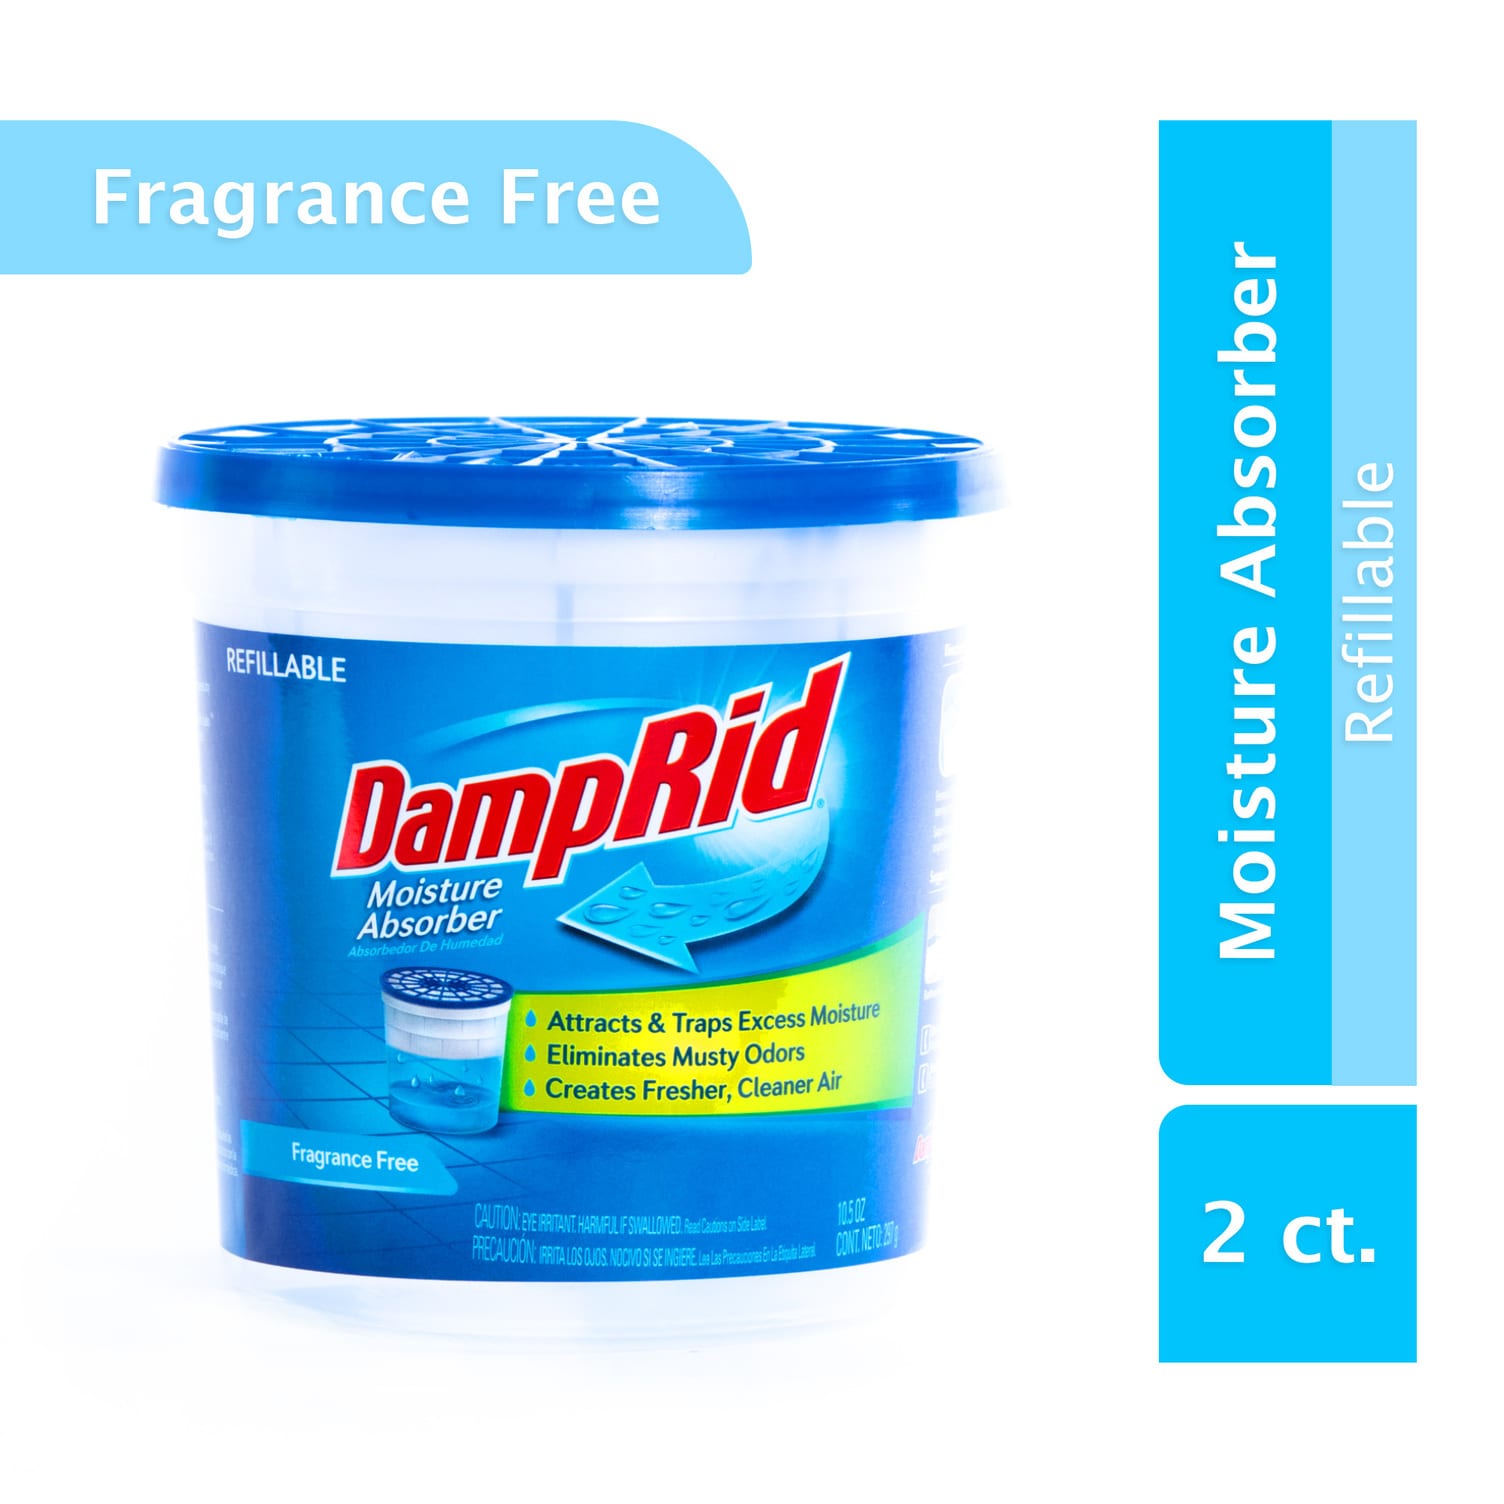 DampRid Refillable Moisture Absorber 10.5oz - Fragrance Free 